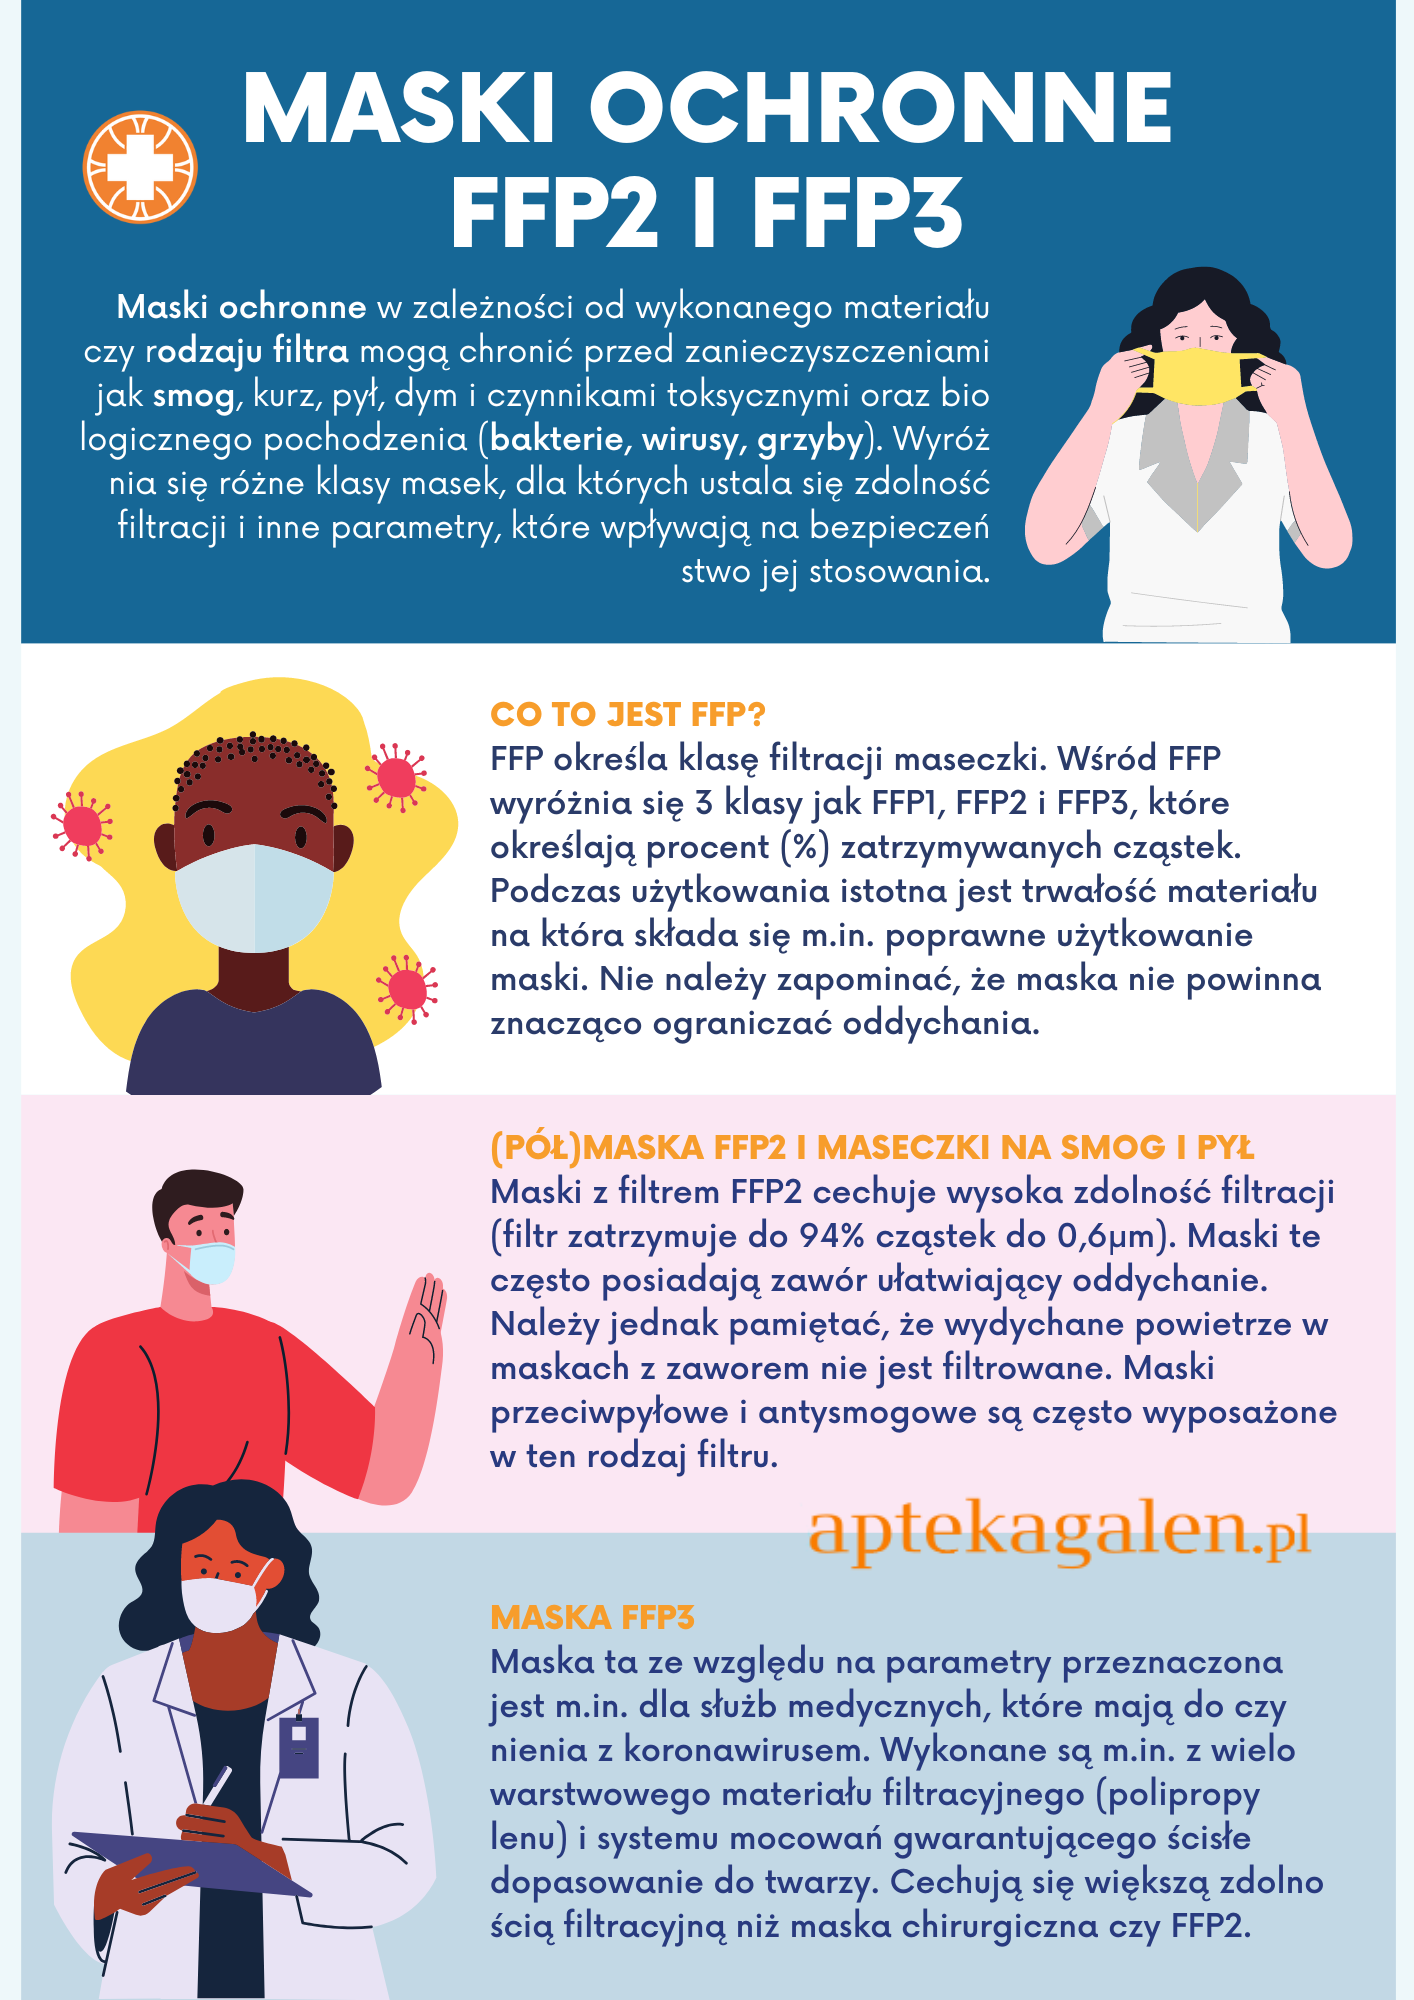 Maski ochronne FFP2 i FFP3 - infografika - apteka internetowa Galen